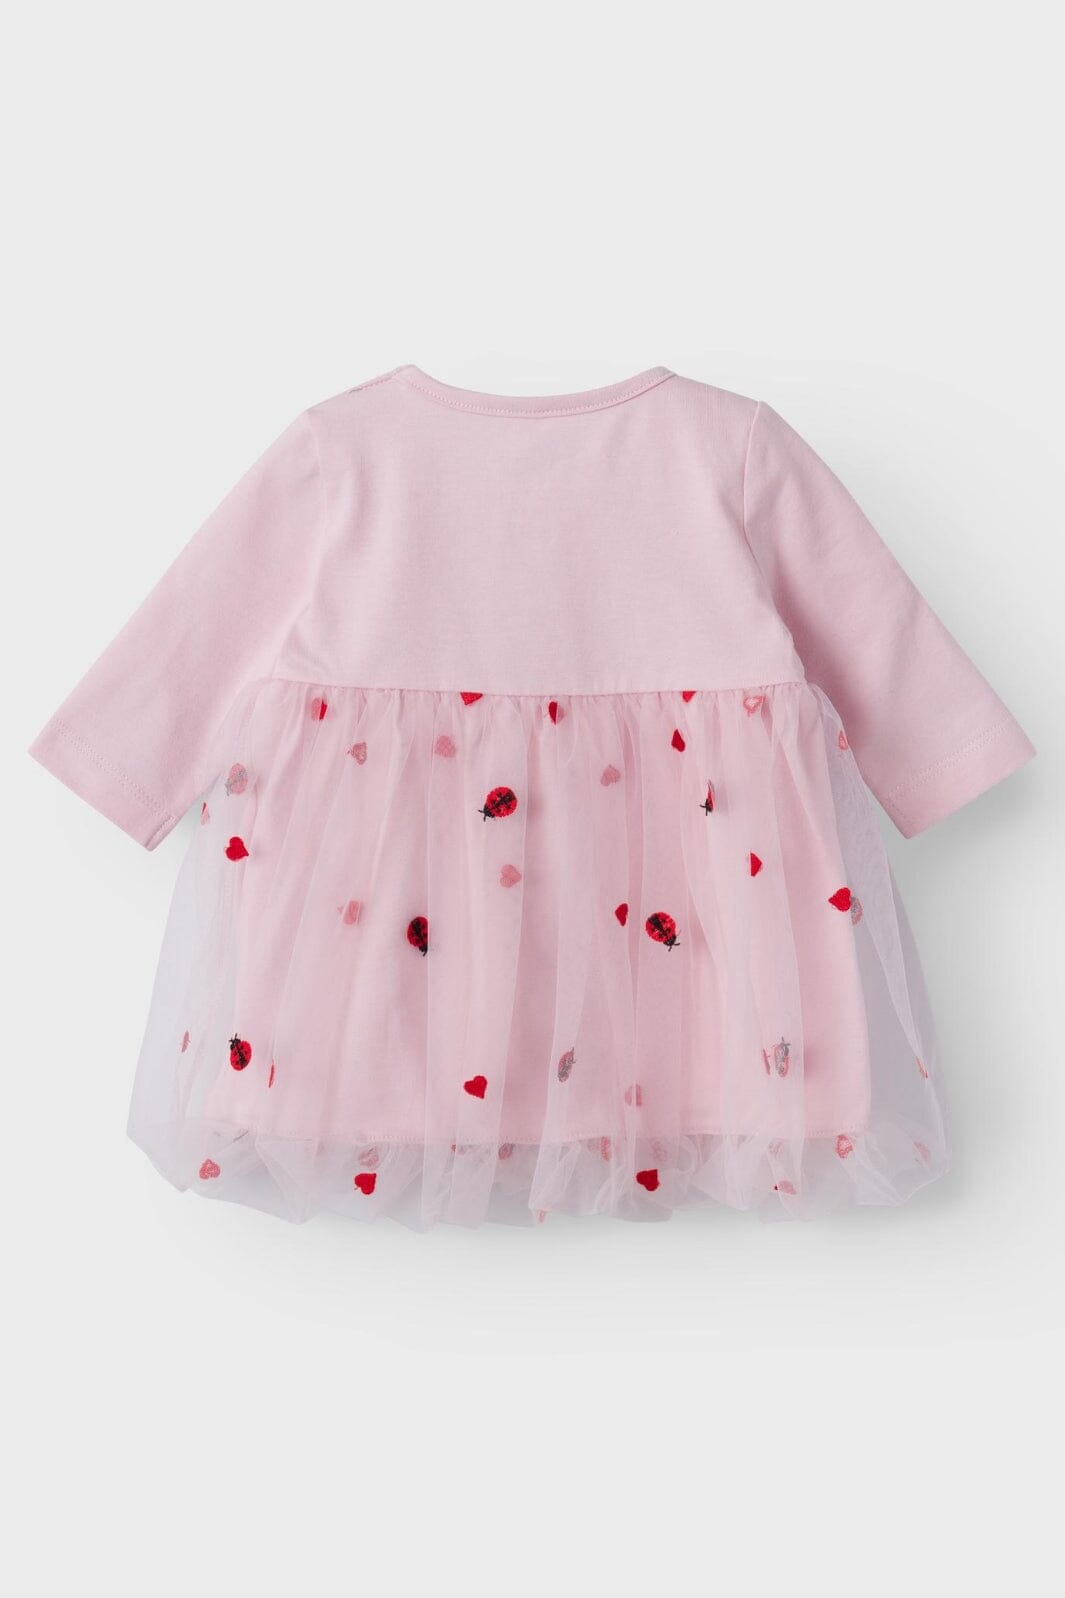 Name It - Nbffloom Ls Dress - 4444118 Parfait Pink Kjoler 